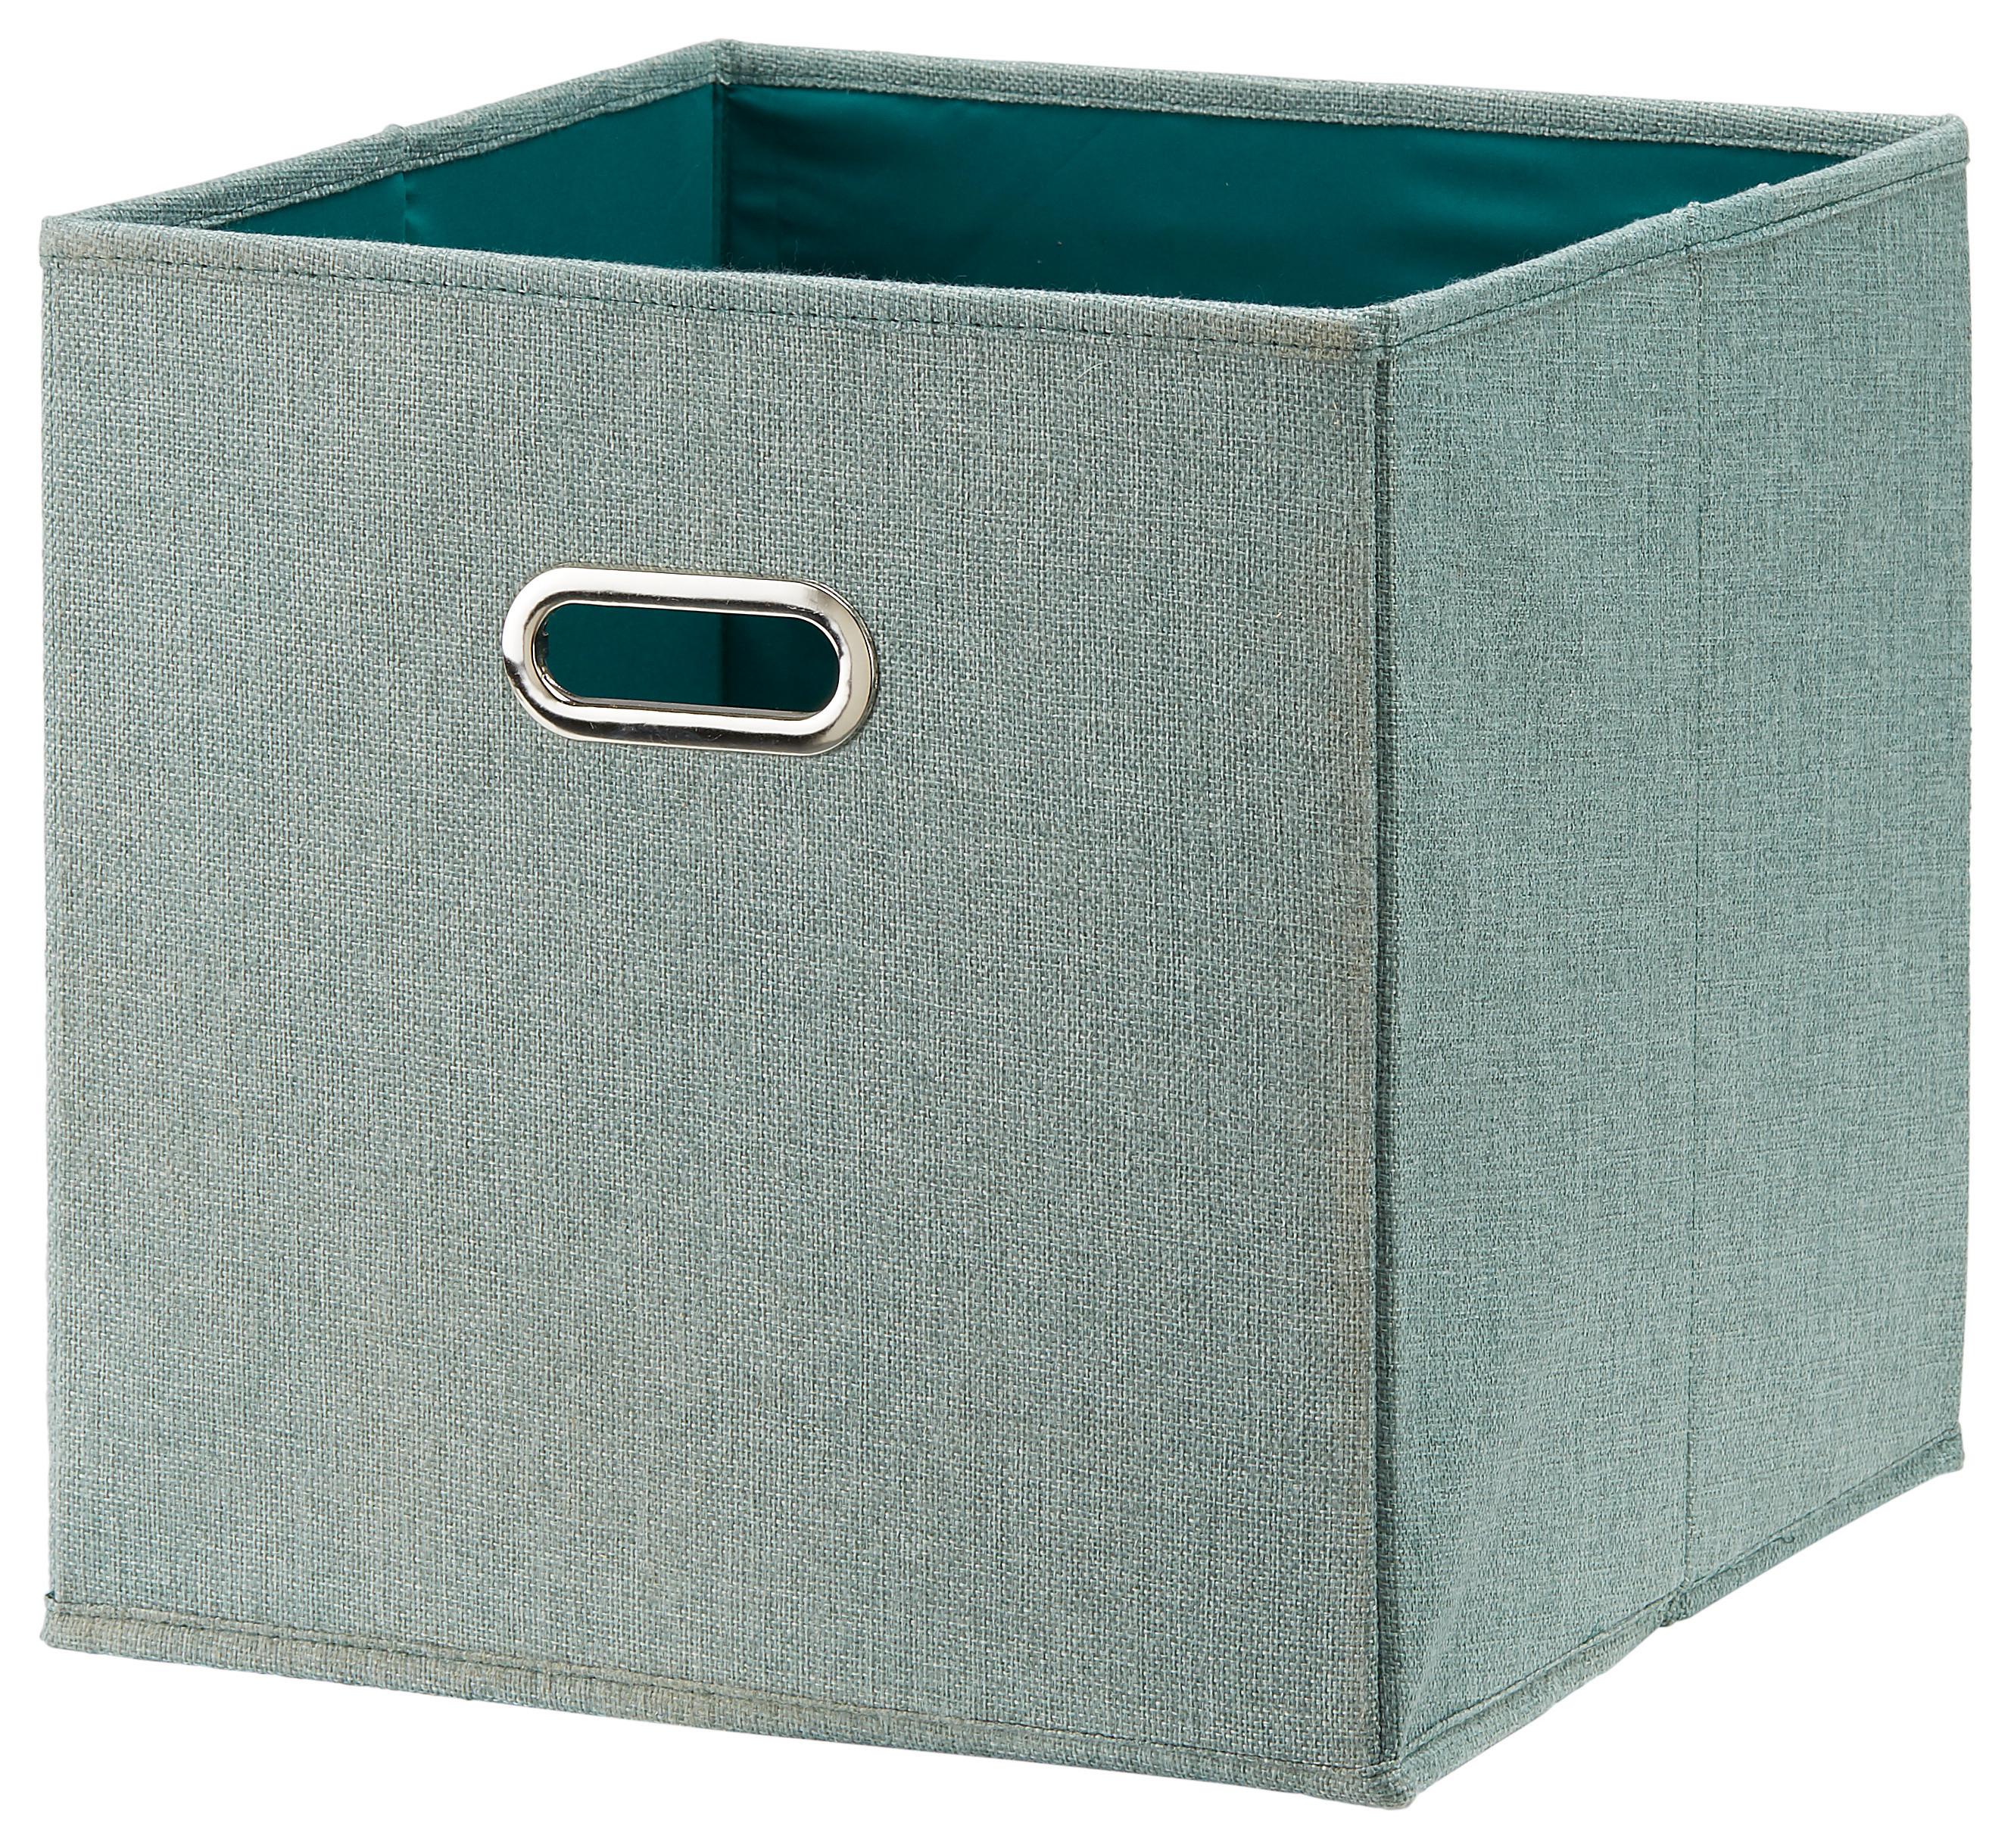 Skládací Krabice Bobby Ca.34l -Ext- -Akt- -Top- - zelená, Moderní, karton/textil (33/32/33cm) - Premium Living